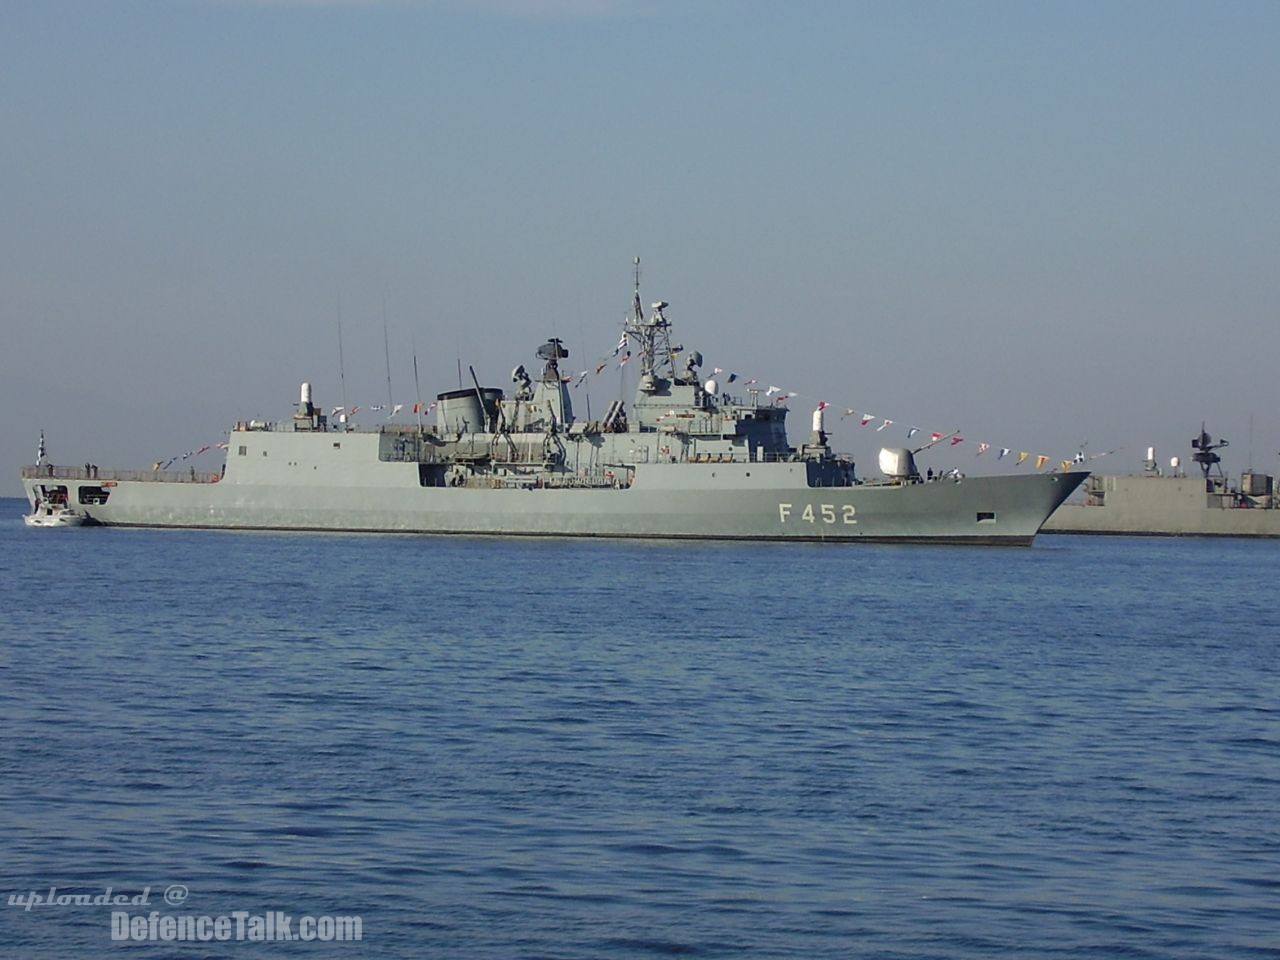 Frigate "Ydra" Meko-200HN Hellenic Navy